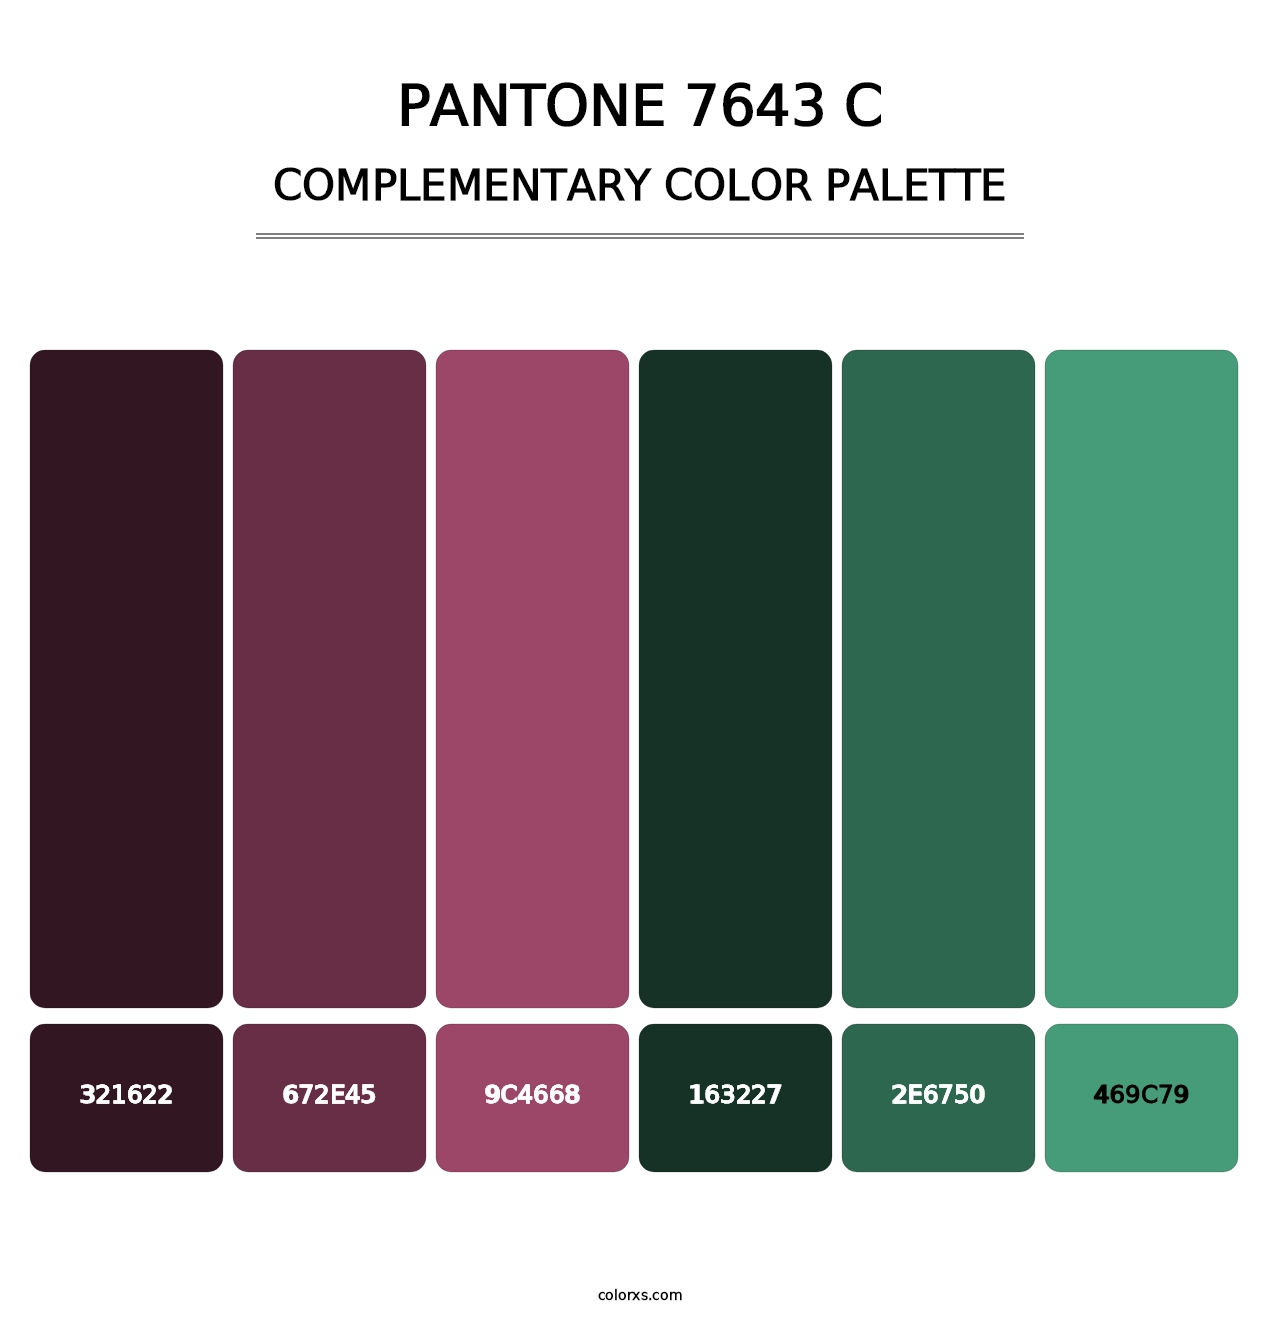 PANTONE 7643 C - Complementary Color Palette